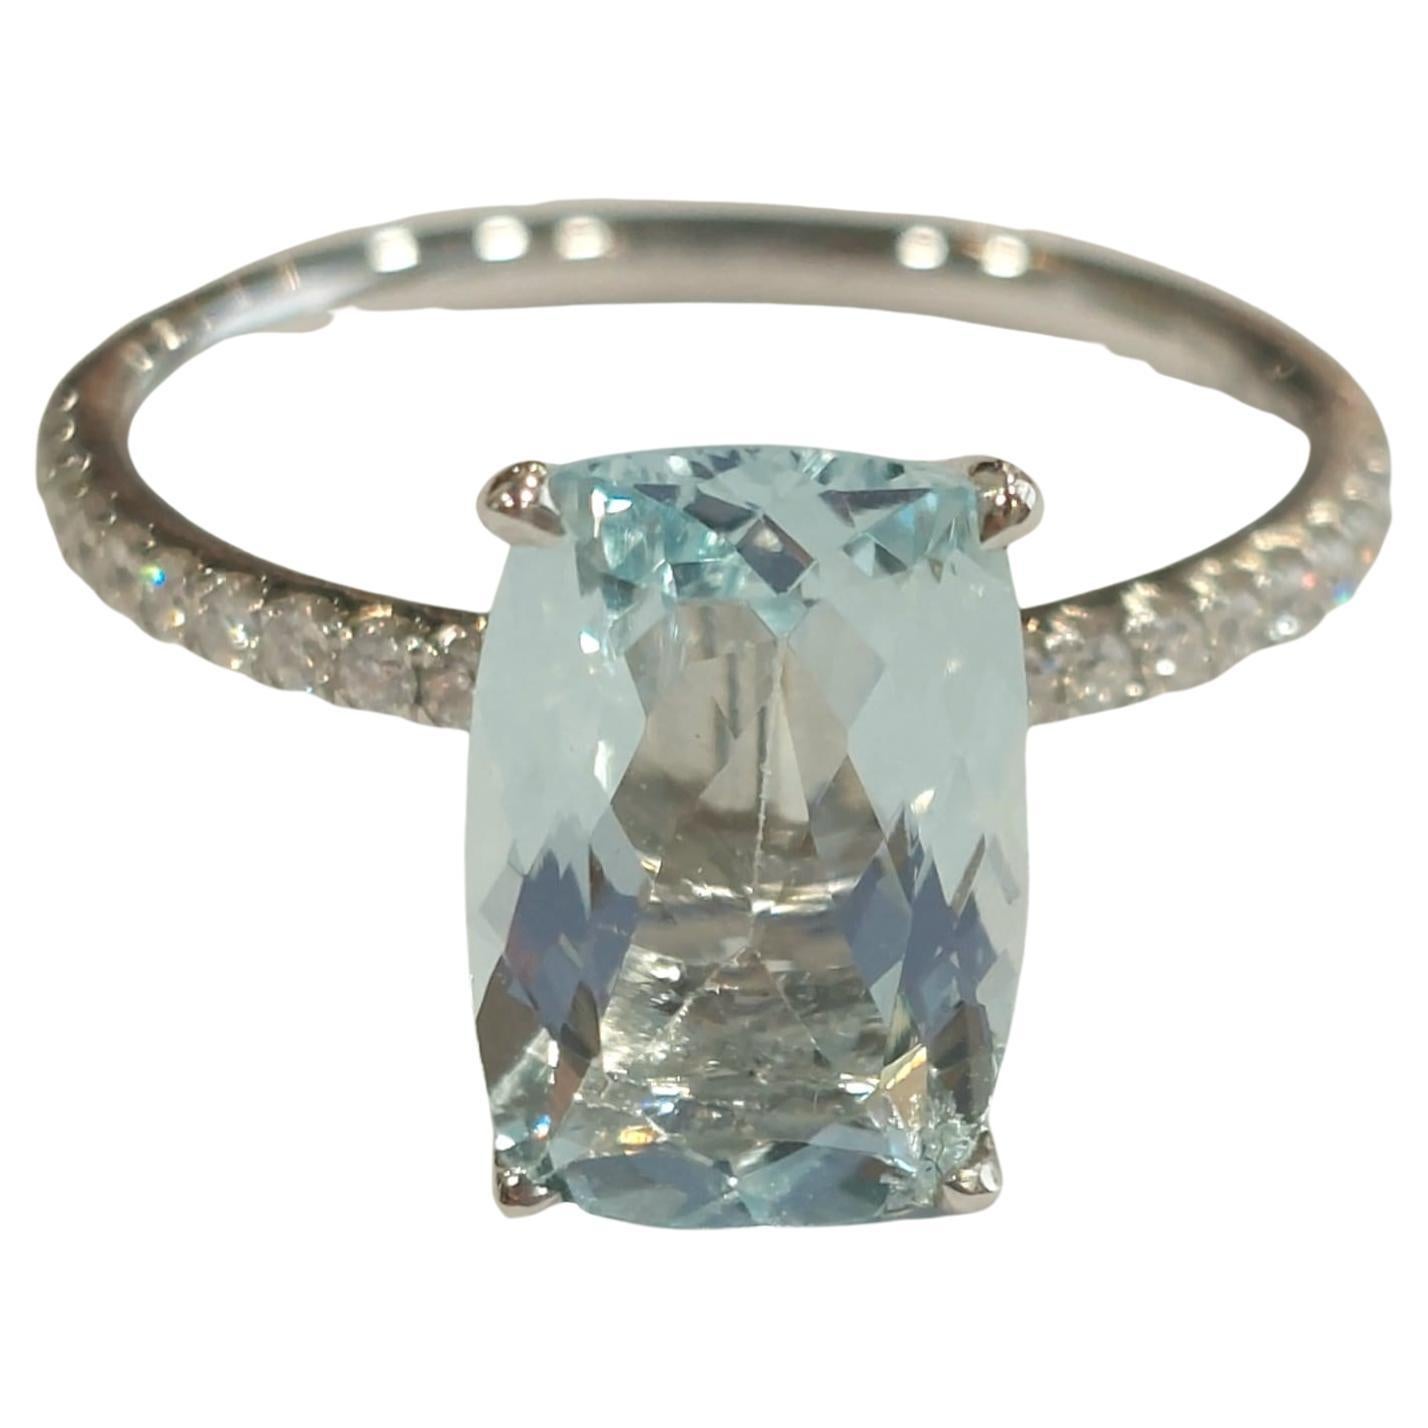 Gilin 18k White Gold Diamond Ring with Aquamarine